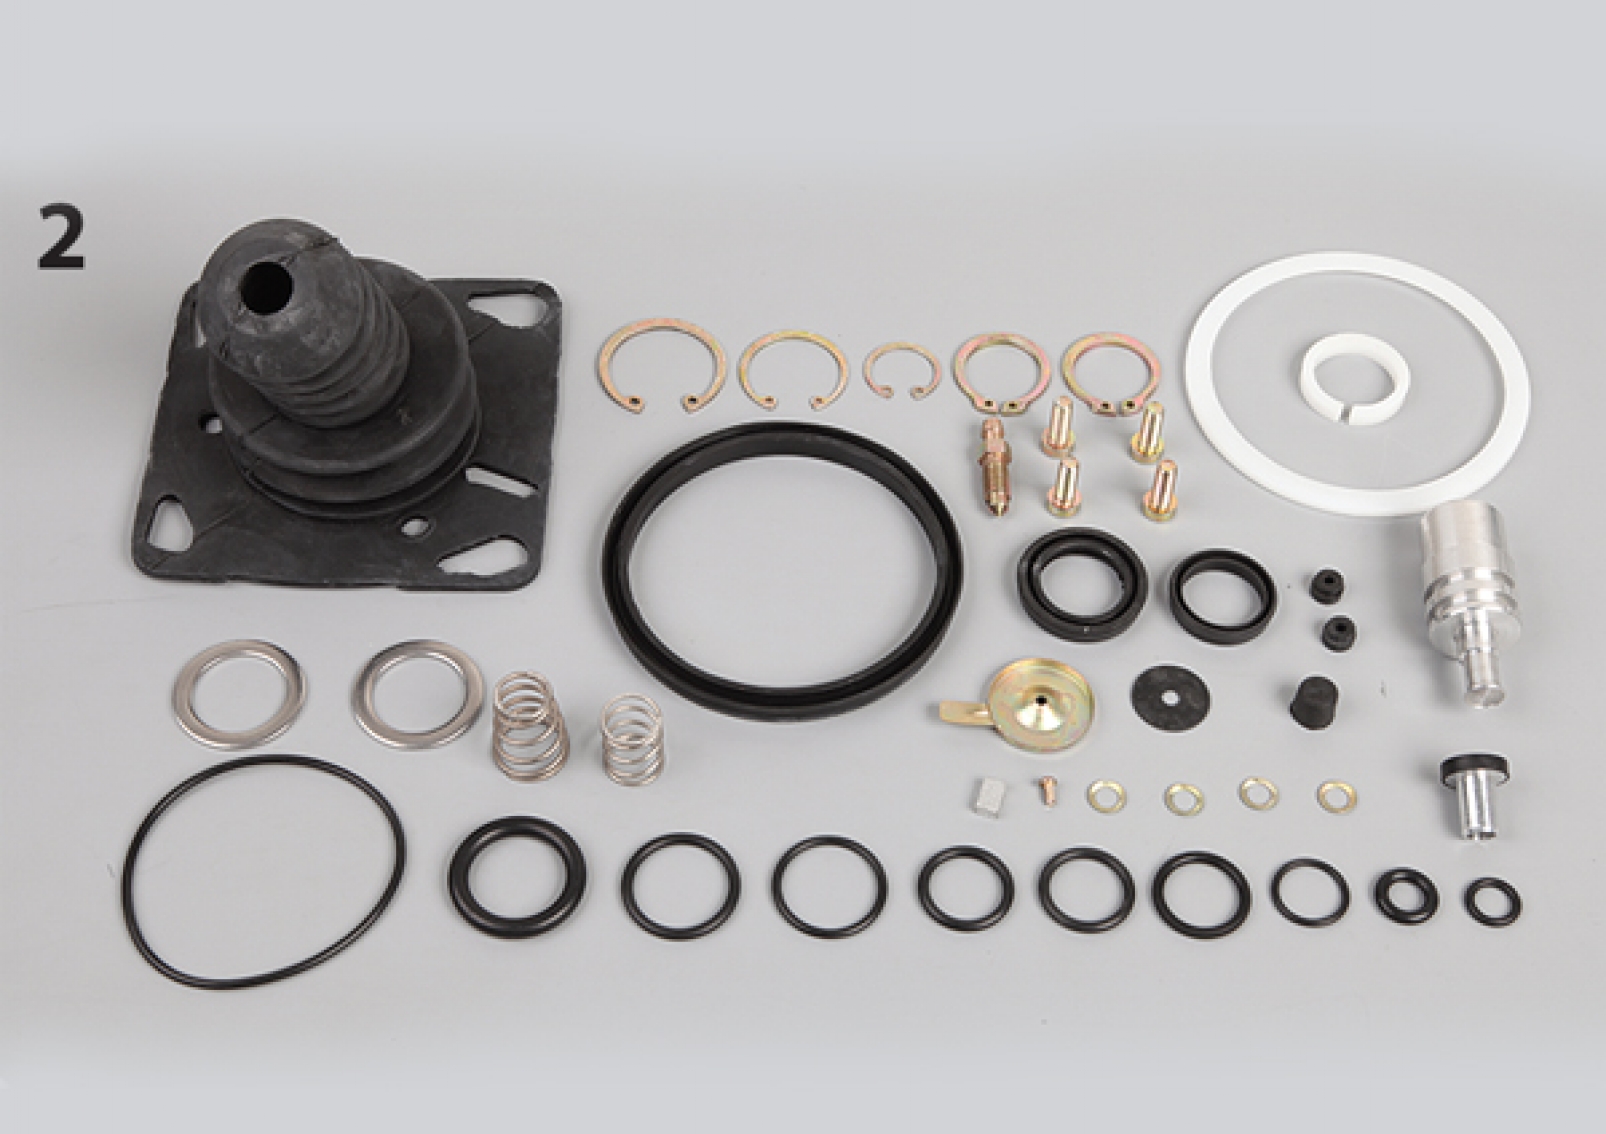 Clutch Servo Repair Kit for Mercedes Benz, Man, Daf,  970 051 910 2